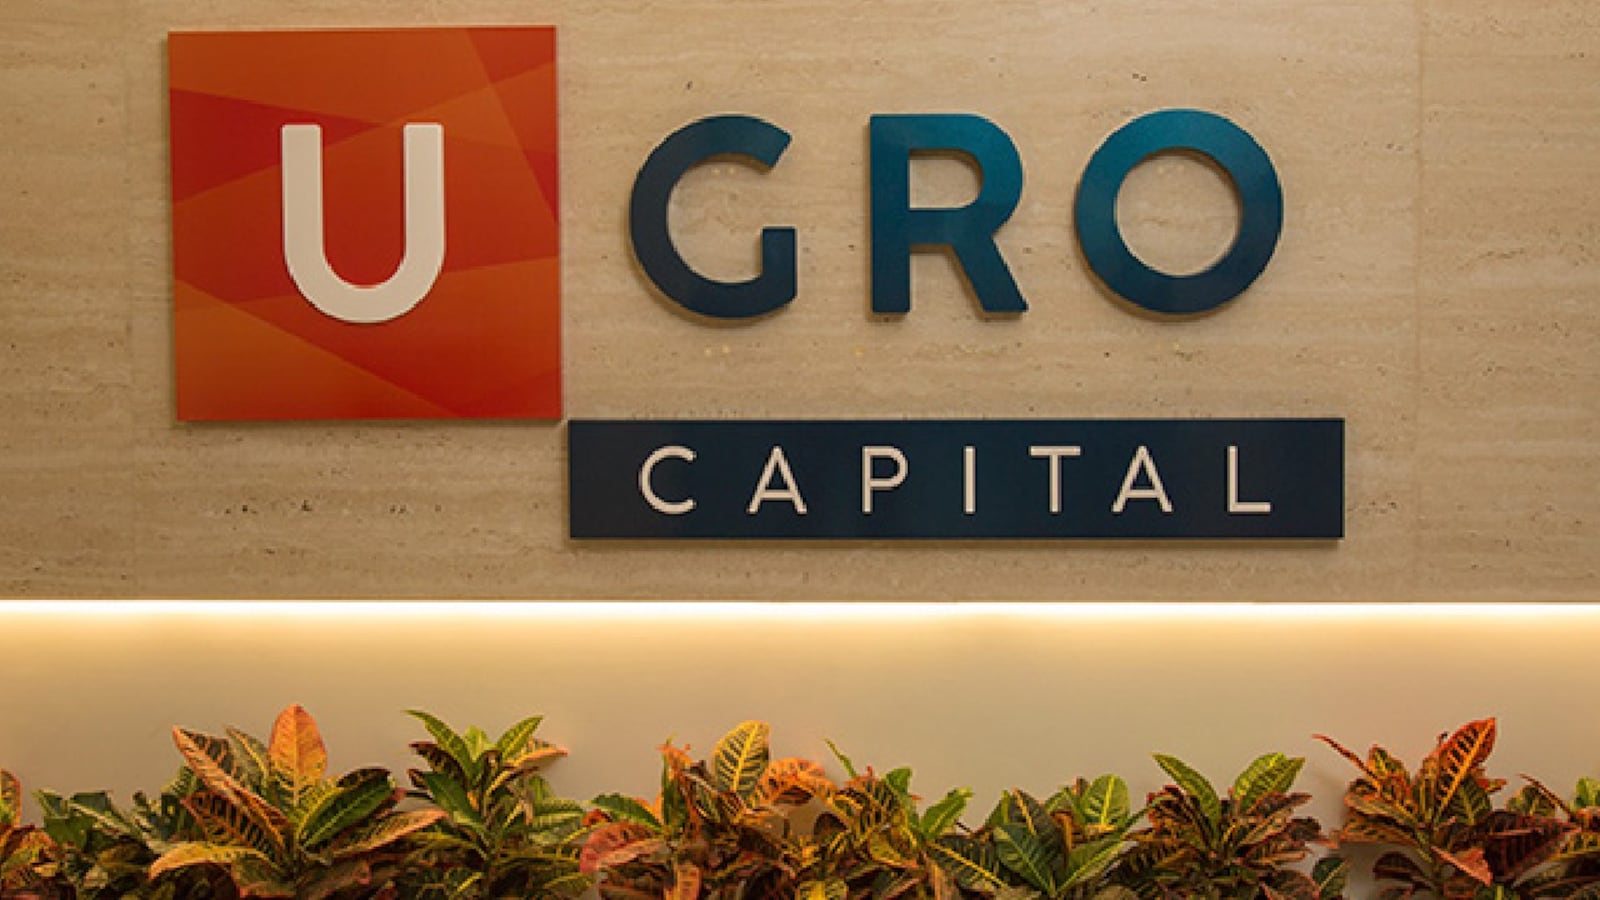 Ugro Capital to raise Rs 340 crore in equity capital